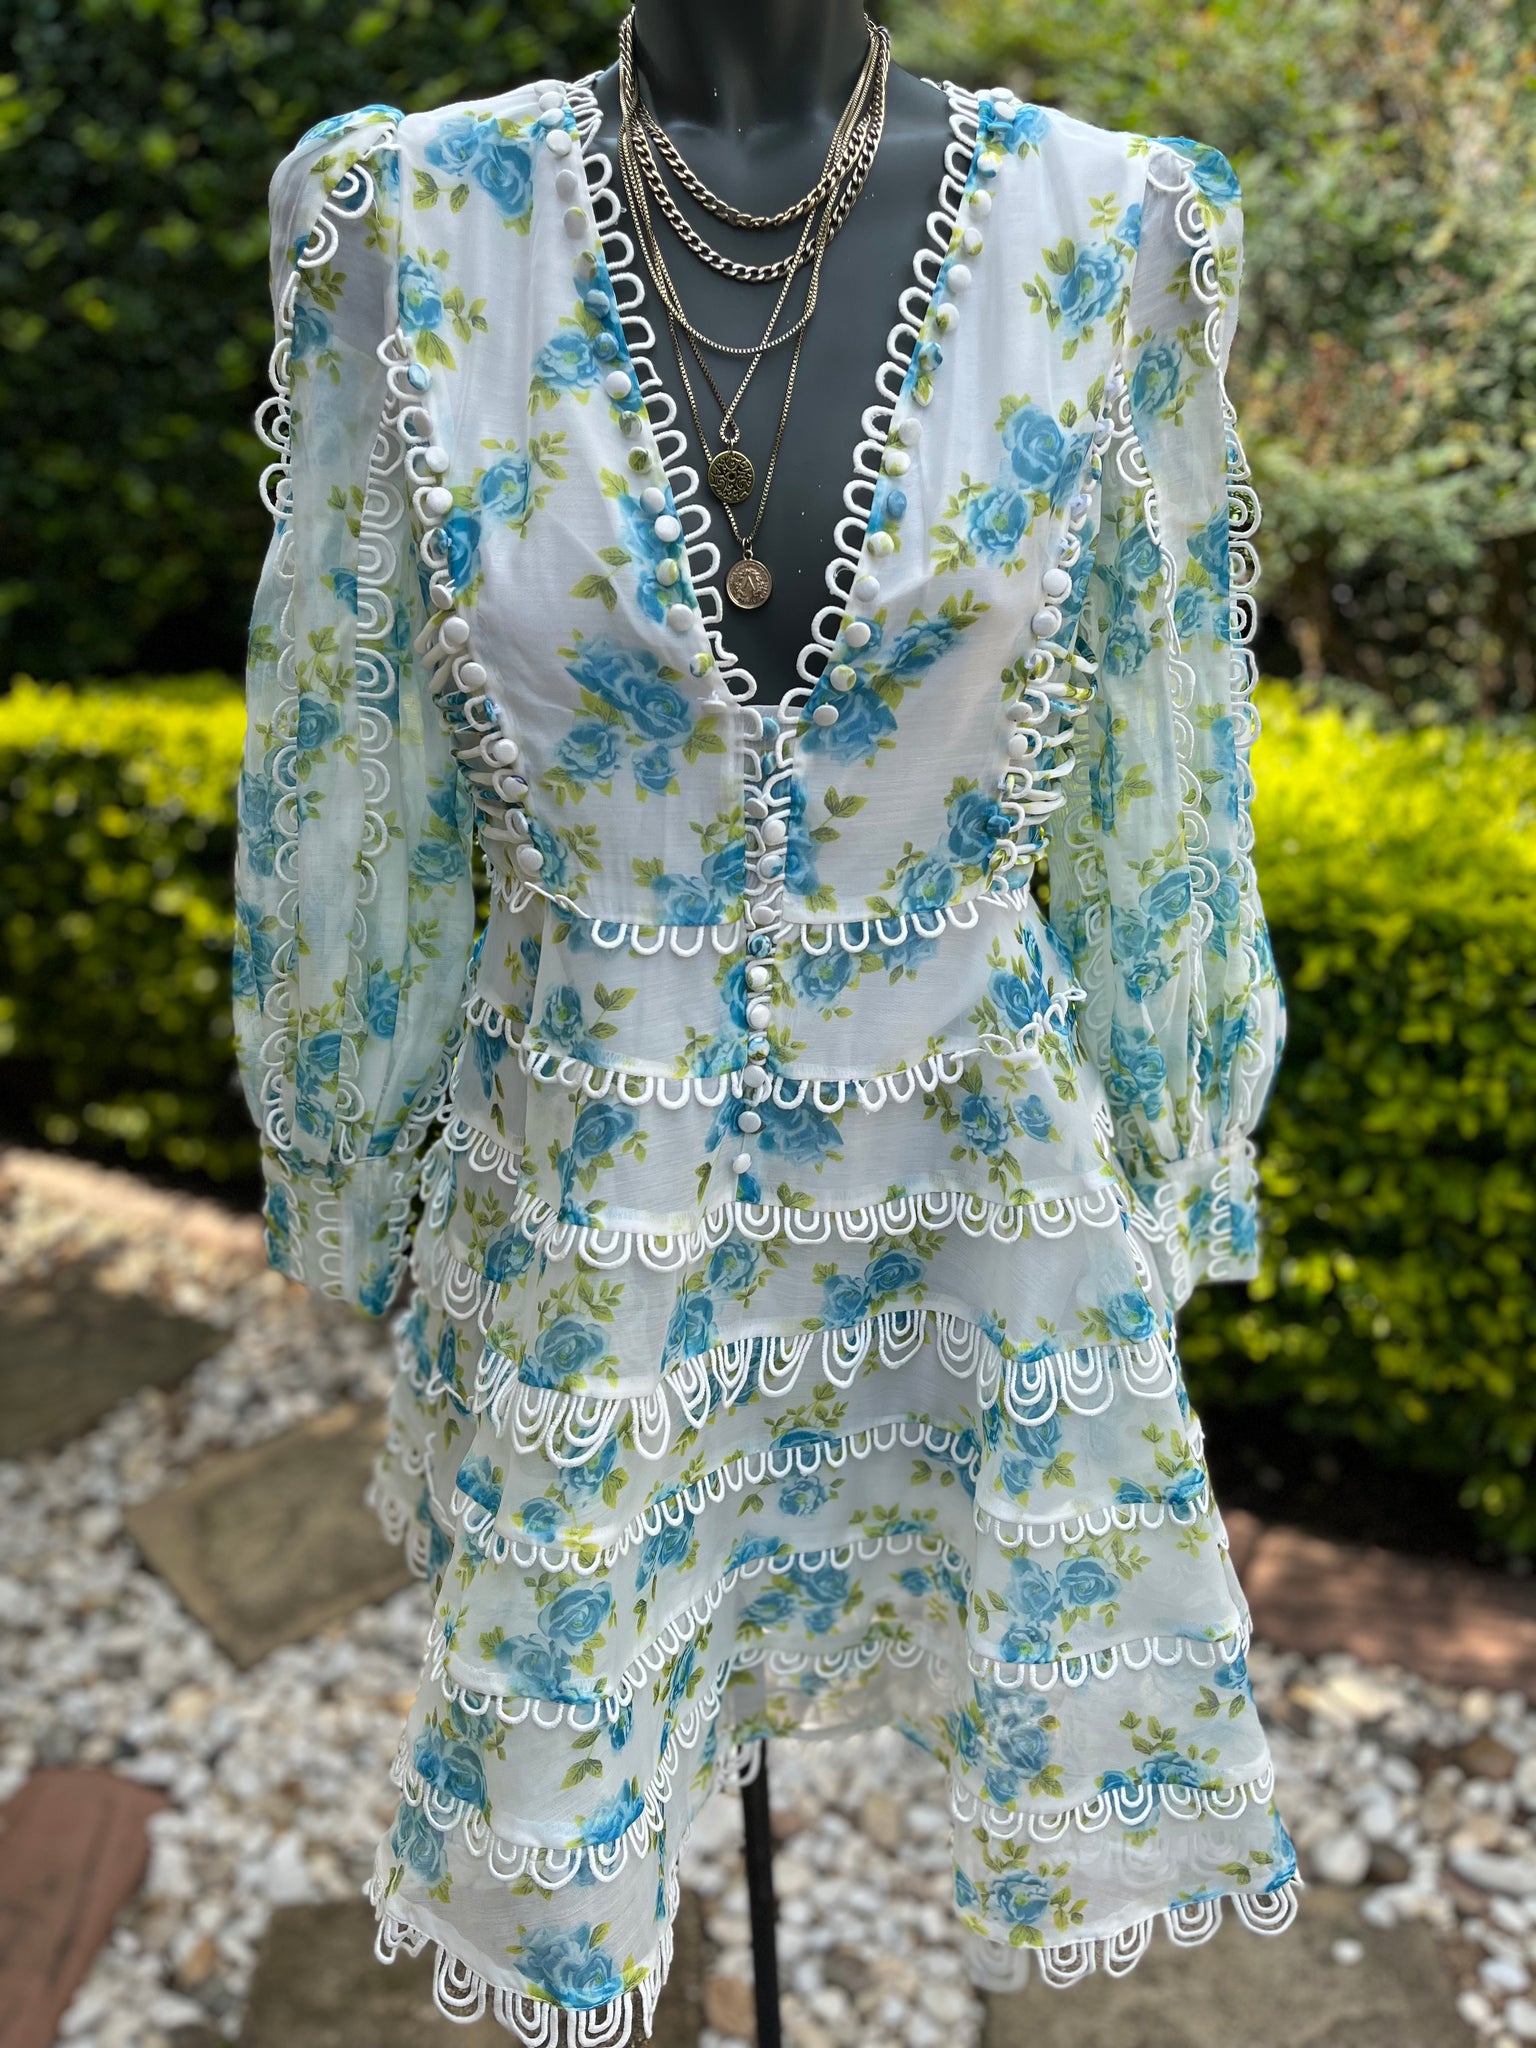 Brand New Lace Detail Cocktail Dress - Size M/L